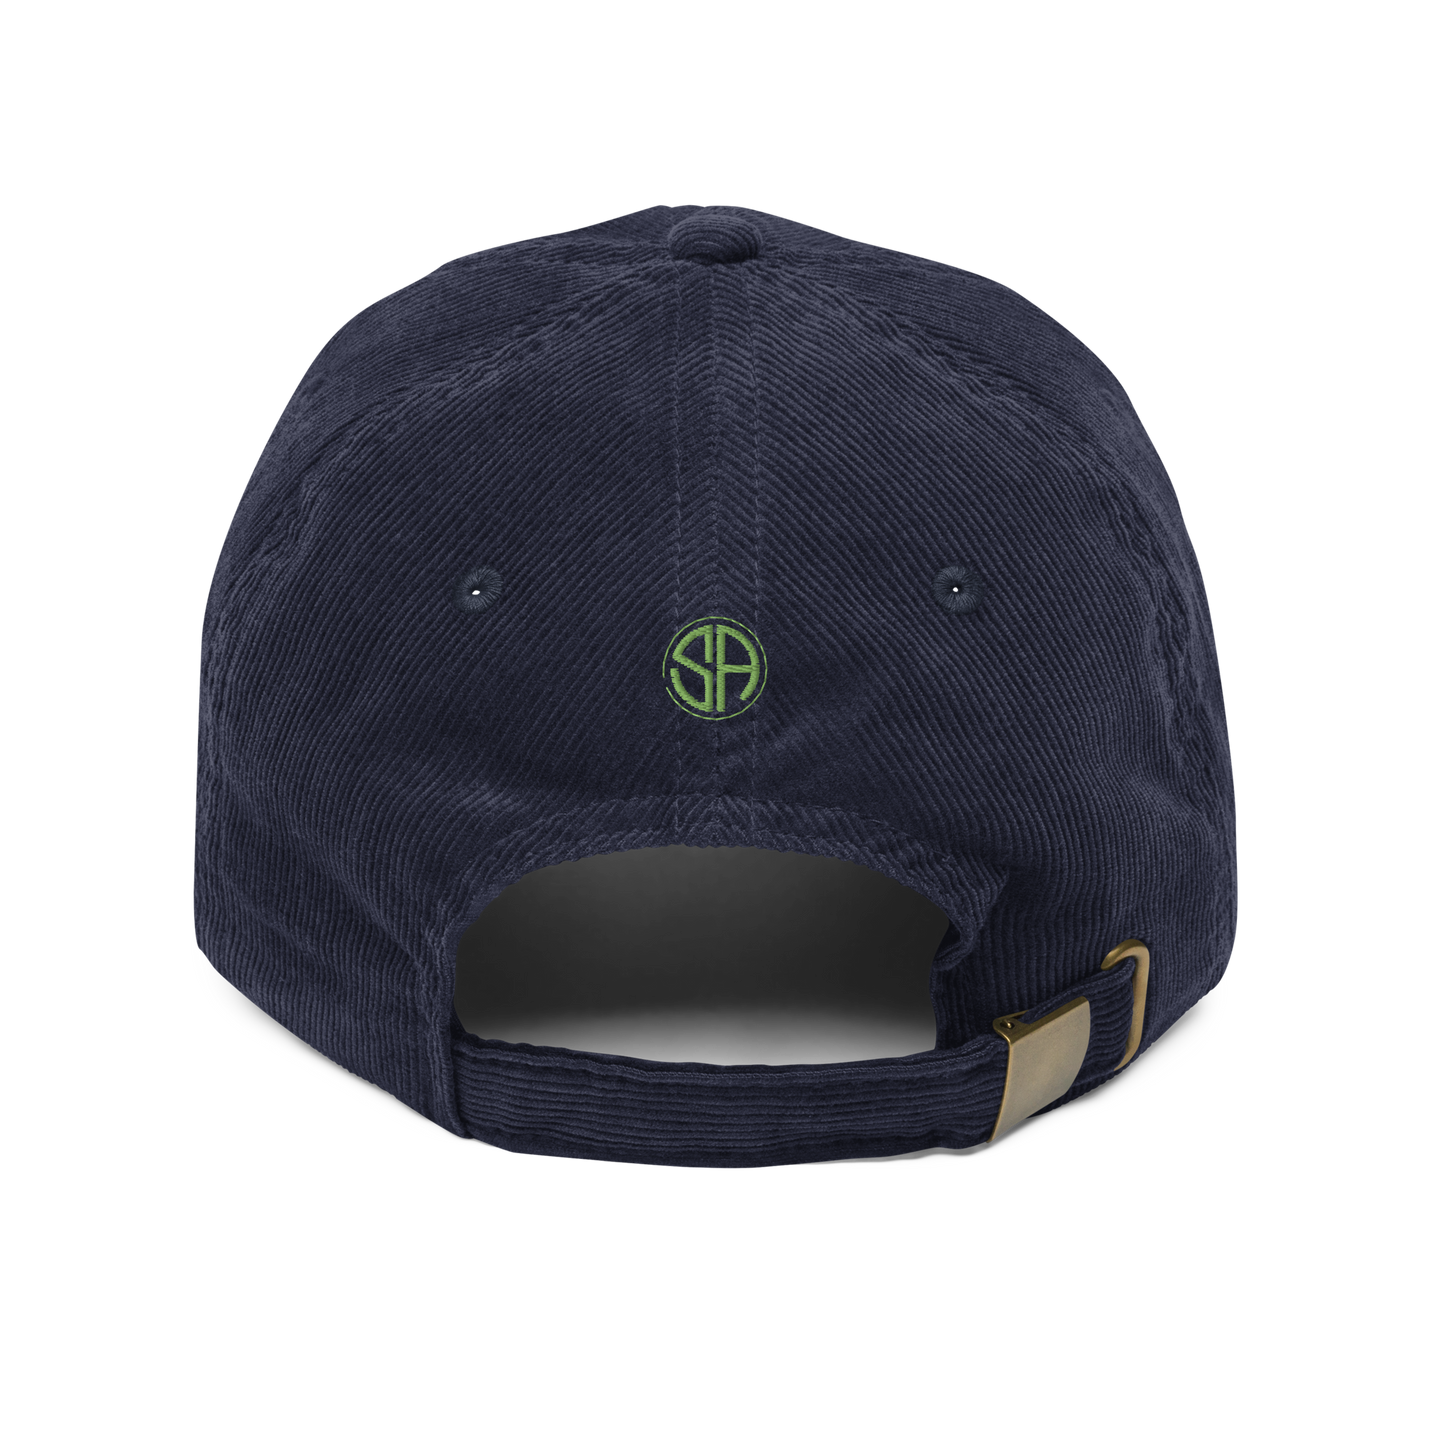 Home Field Advantage Custom Vintage Corduroy Baseball Hat navy kiwi green